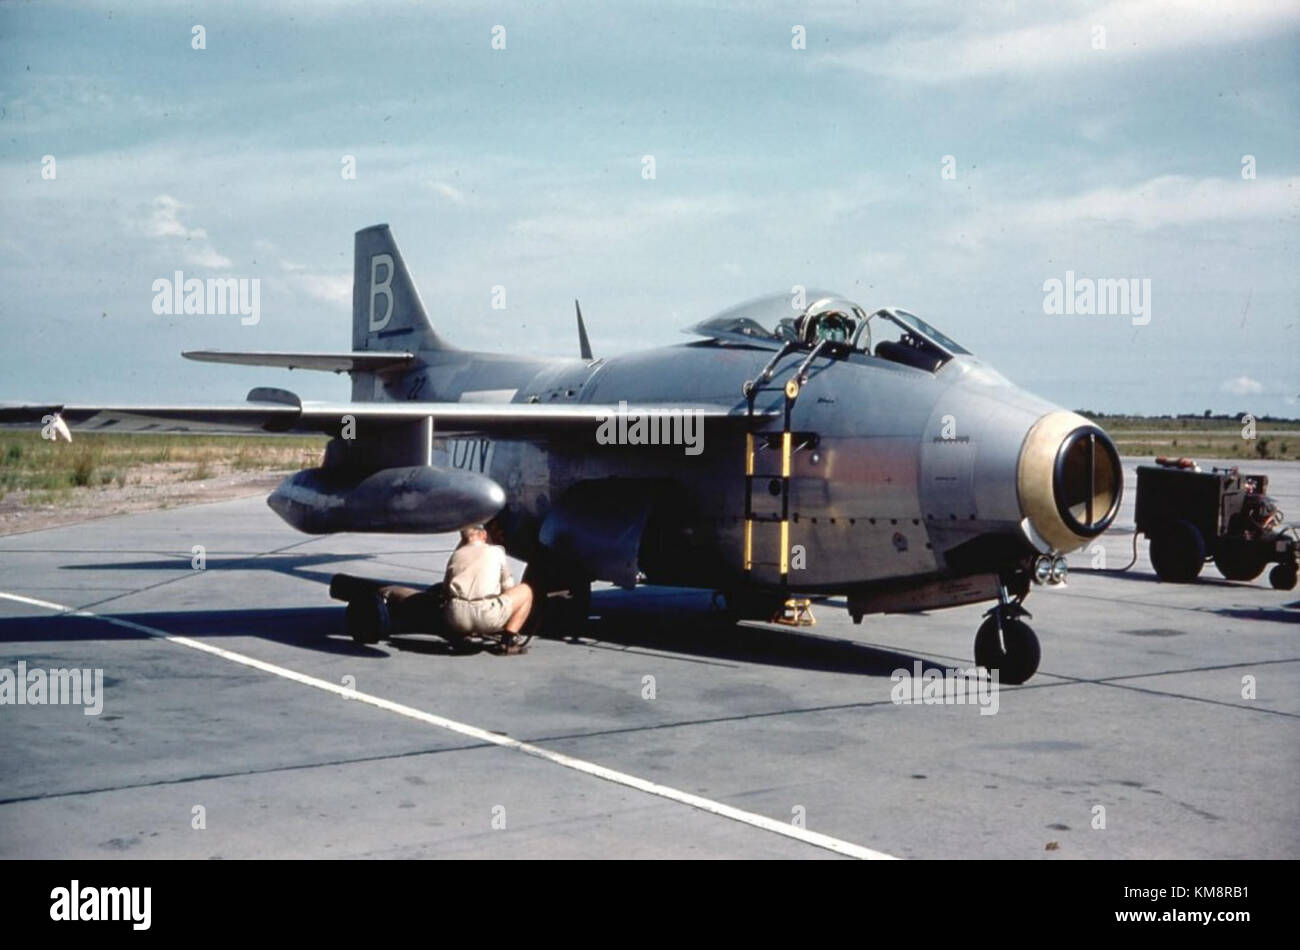 J 29 reconnaissance variant at Kamina Air Base Stock Photo - Alamy